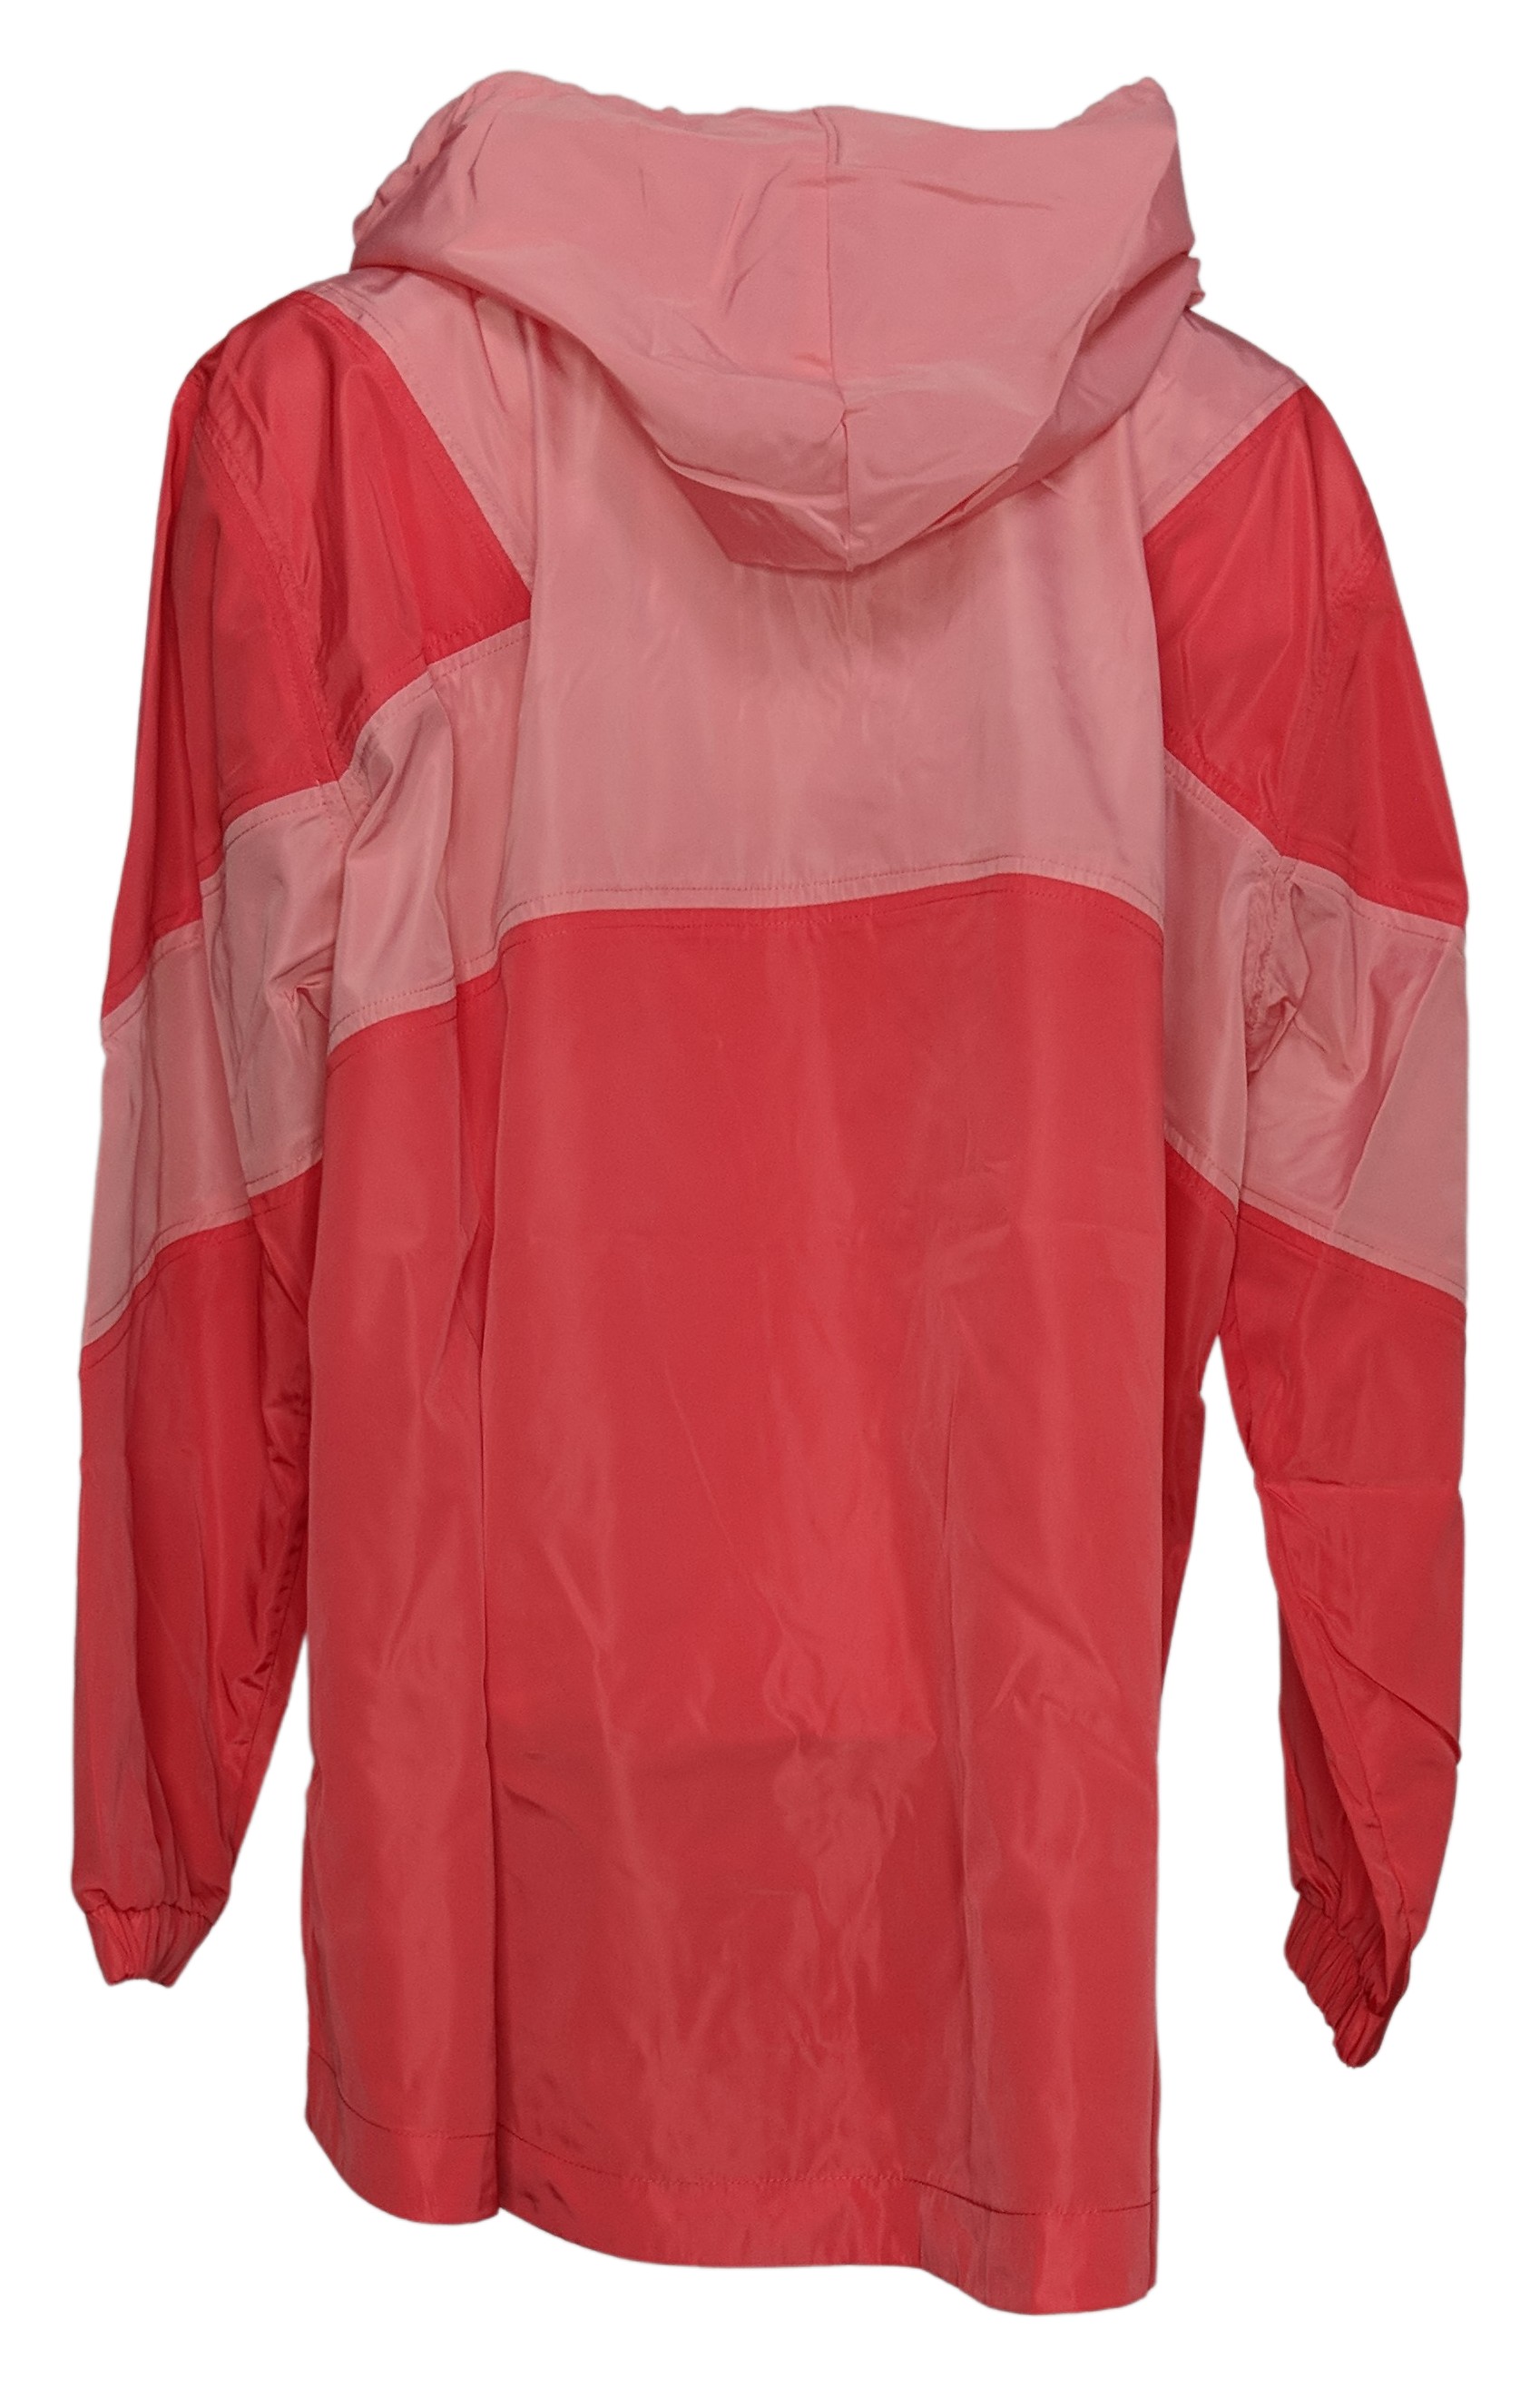 Susan Graver SG Sport Colorblocked Pullover Hooded Jacket Women's Sz L Orange